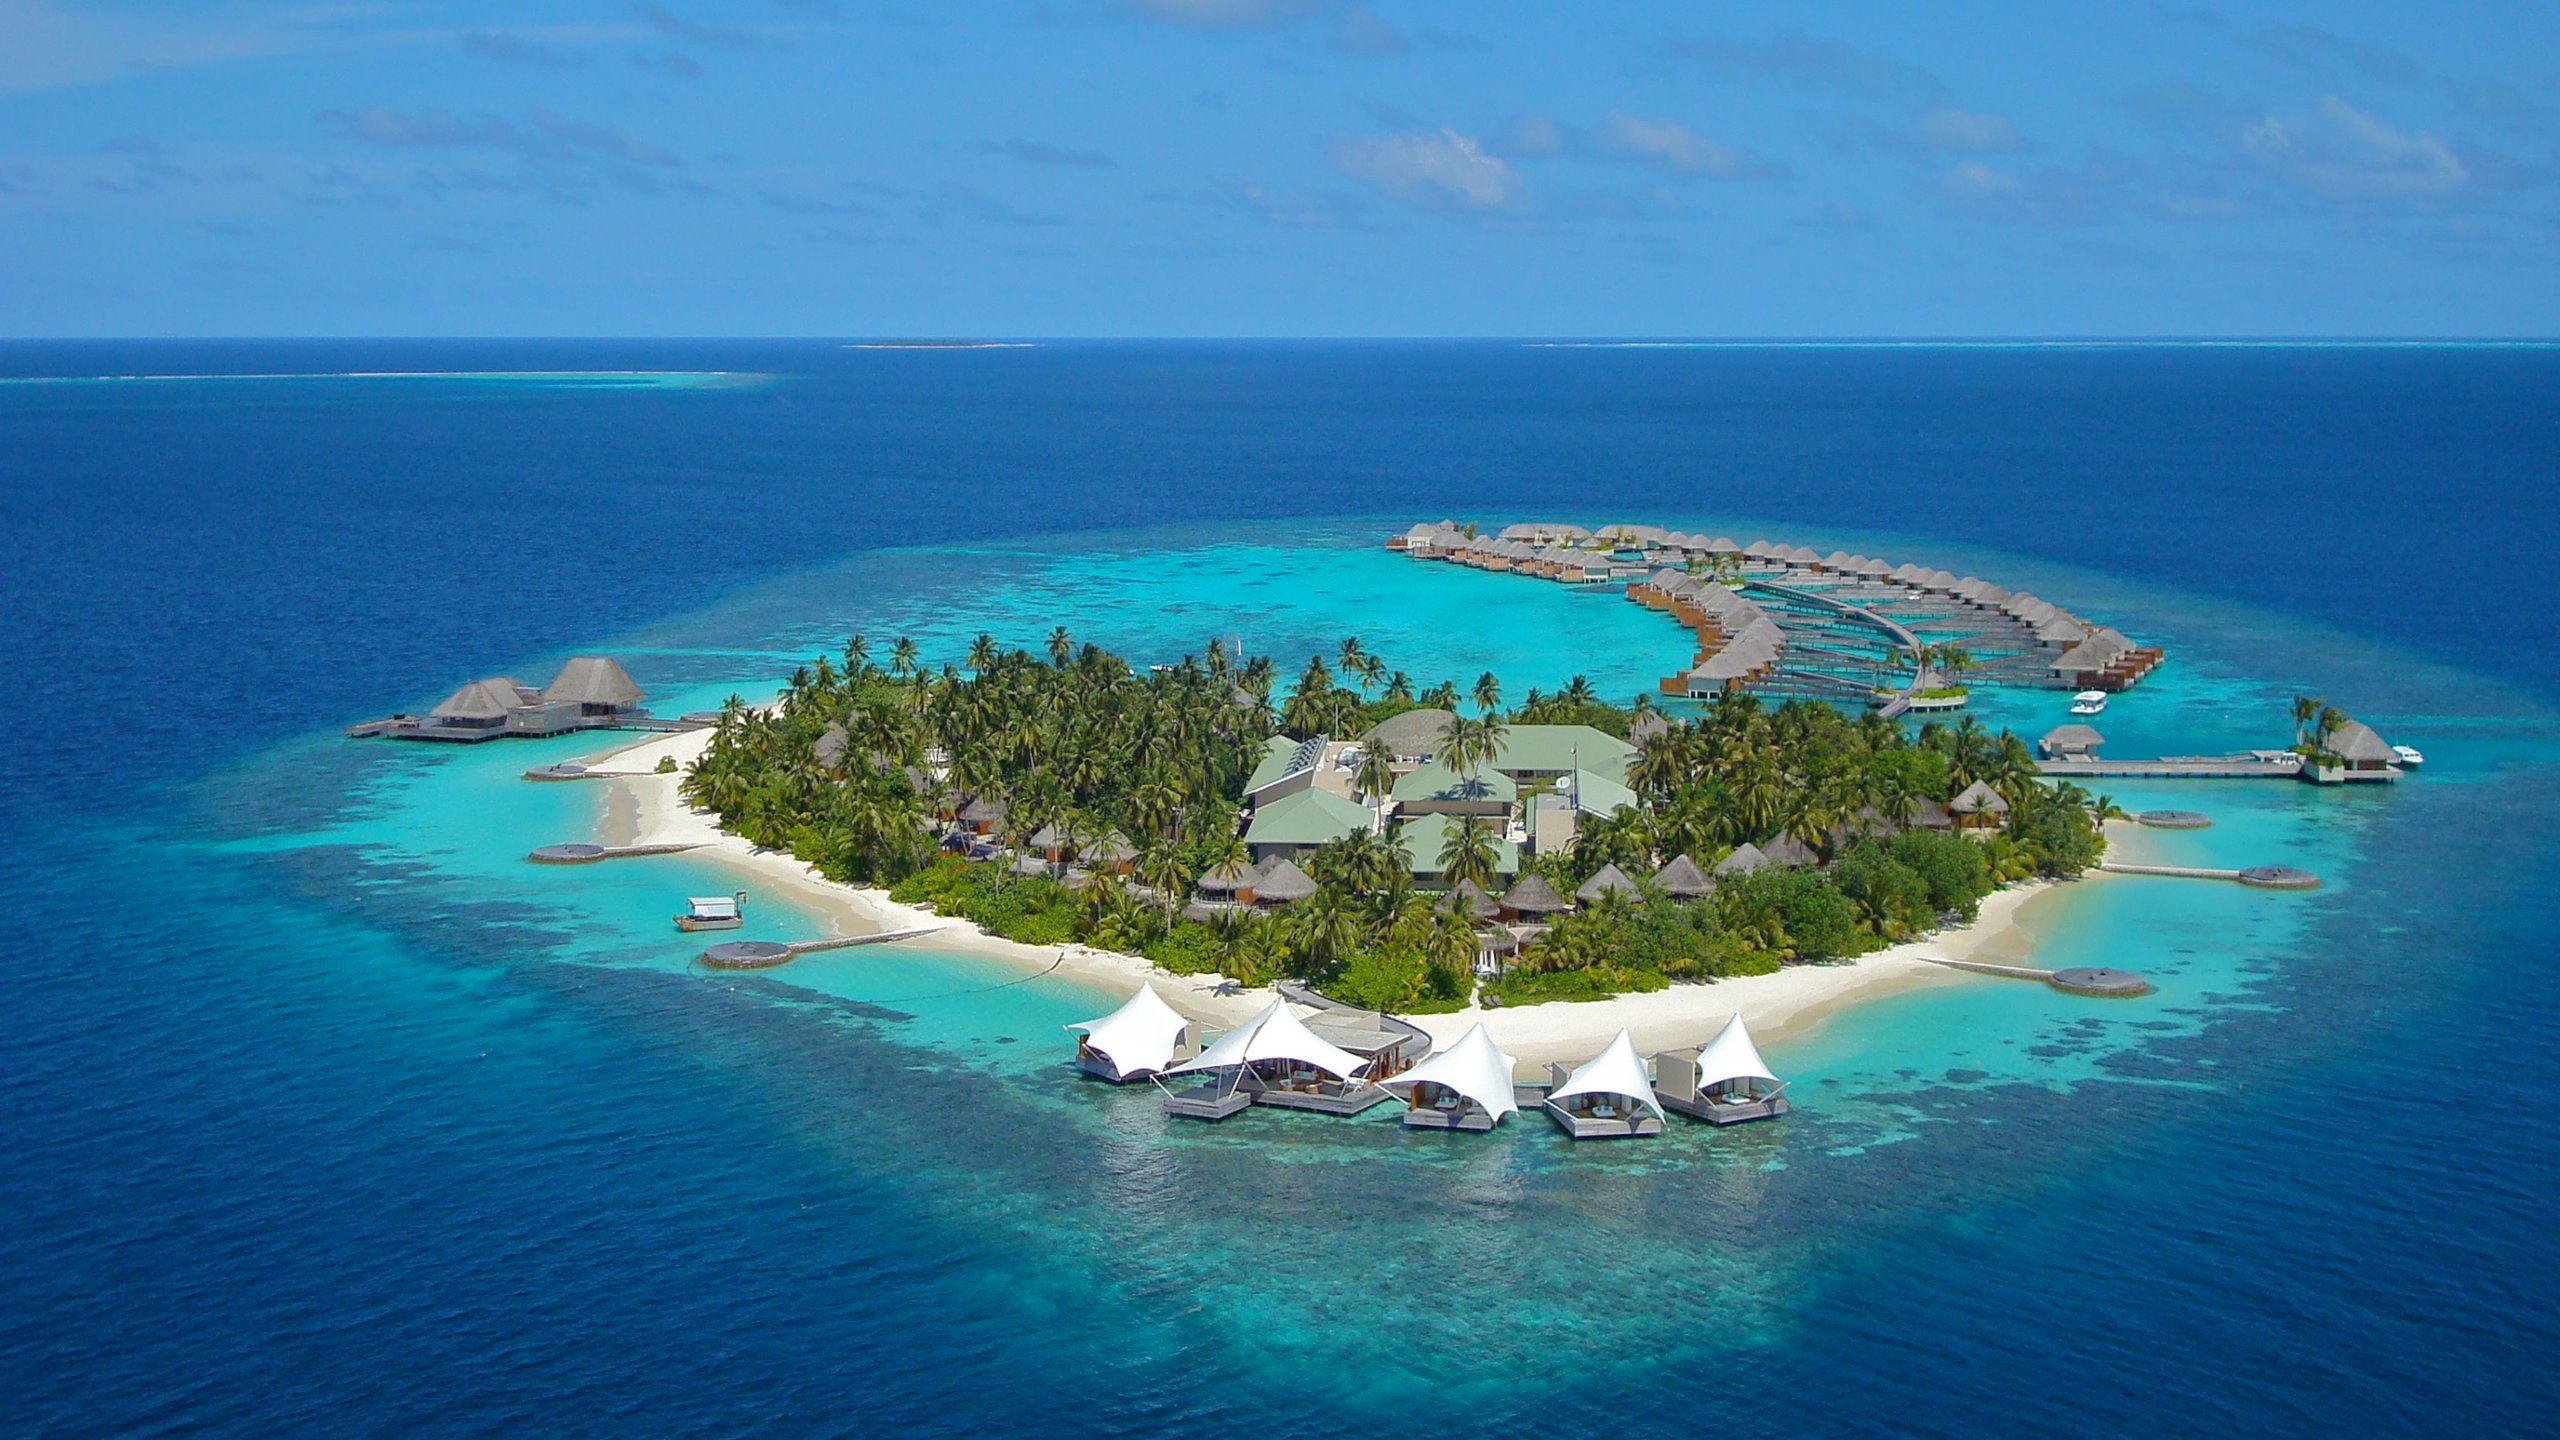 𝗧𝗢𝗣 𝟭𝟬 𝗛𝗼𝘁𝗲𝗹𝘀 𝗶𝗻 Maldives (2020) | Expedia India